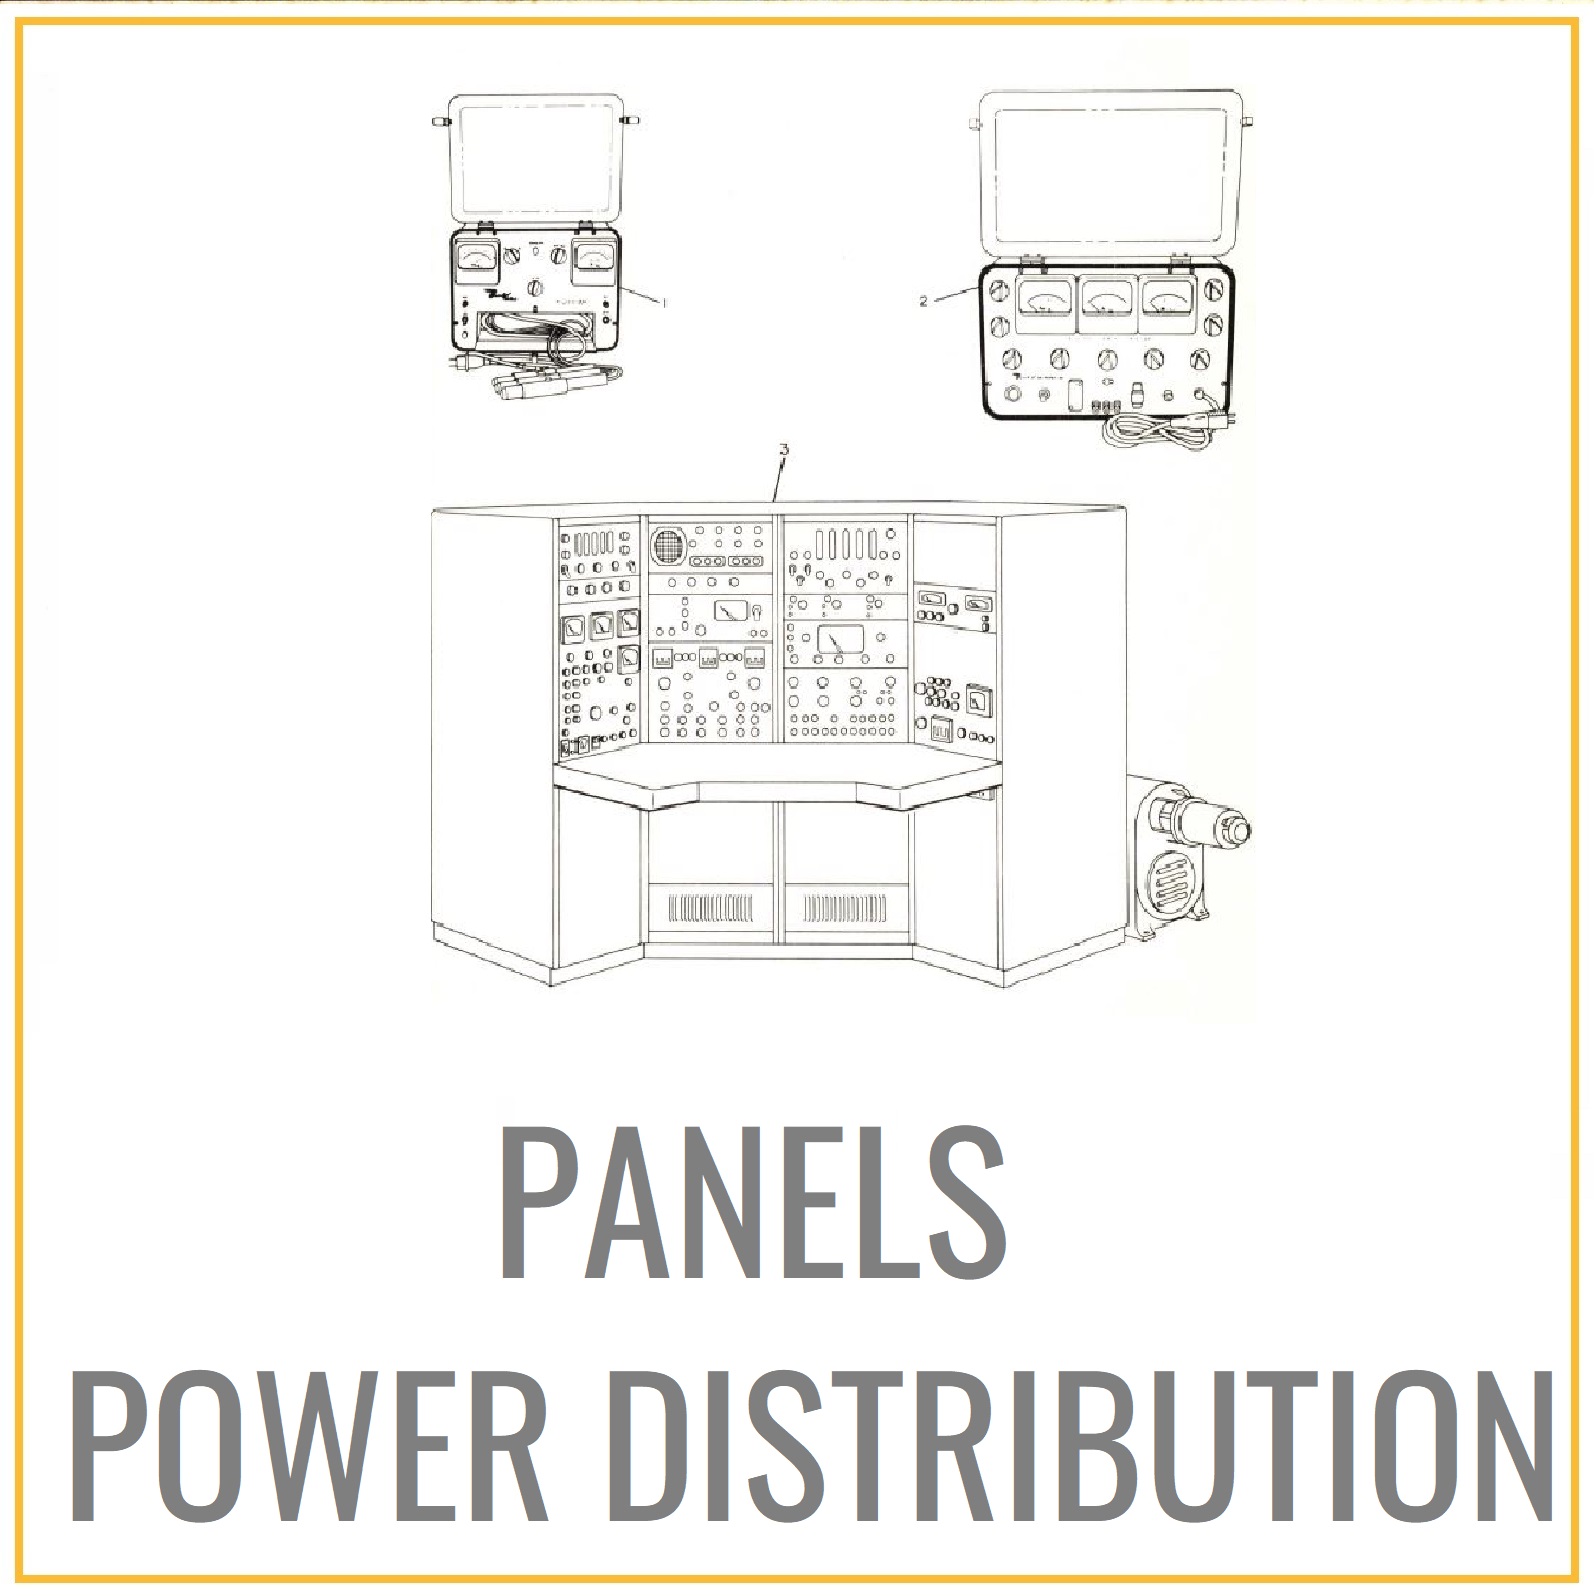 Panels - Power Distribution